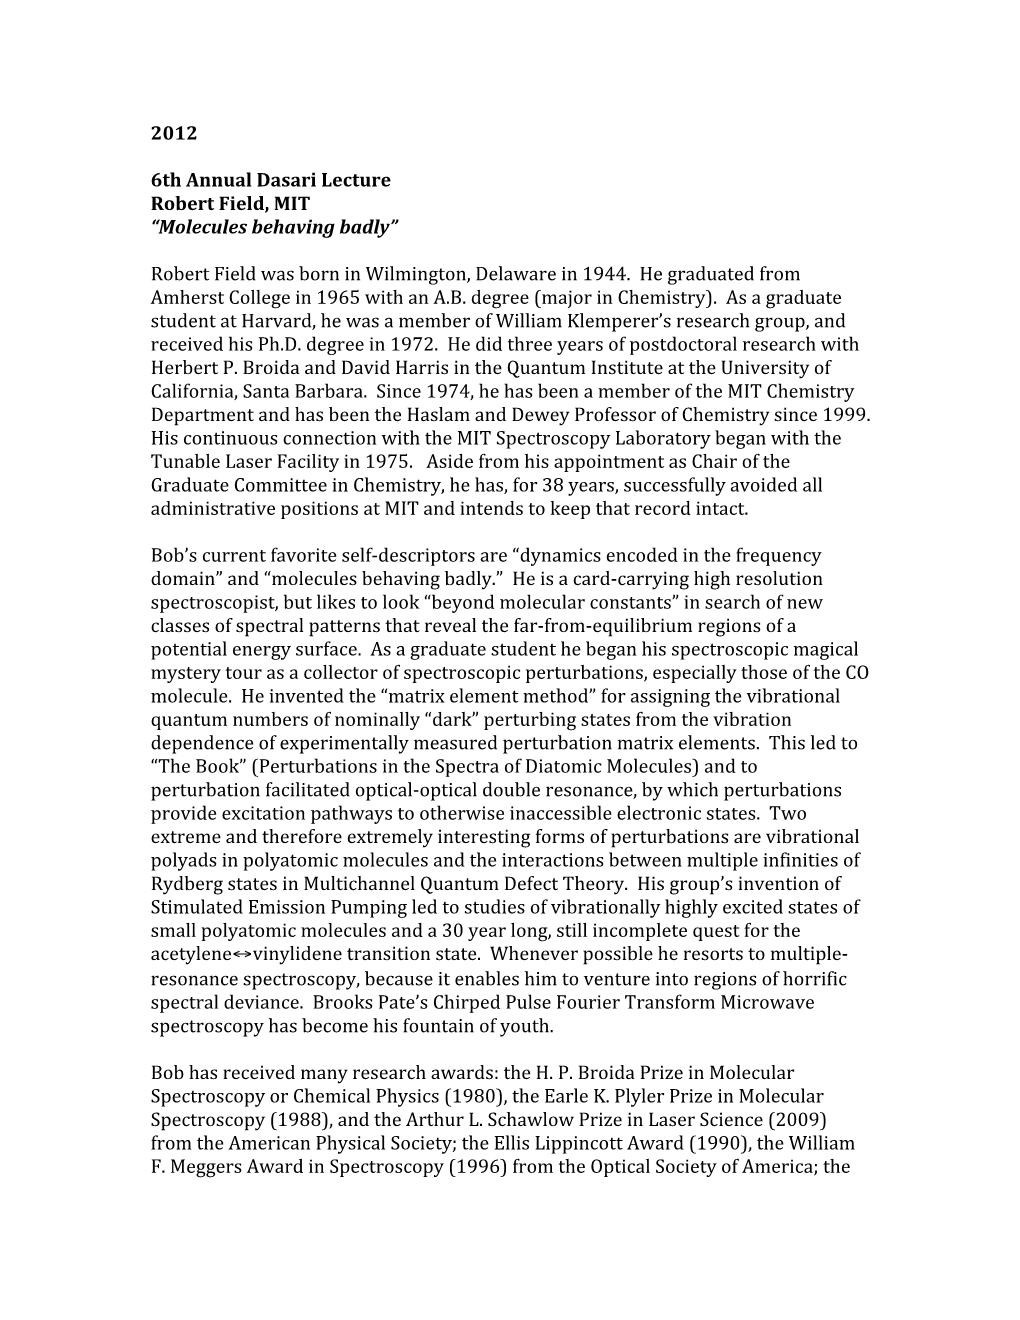 2012 6Th Annual Dasari Lecture Robert Field, MIT “Molecules